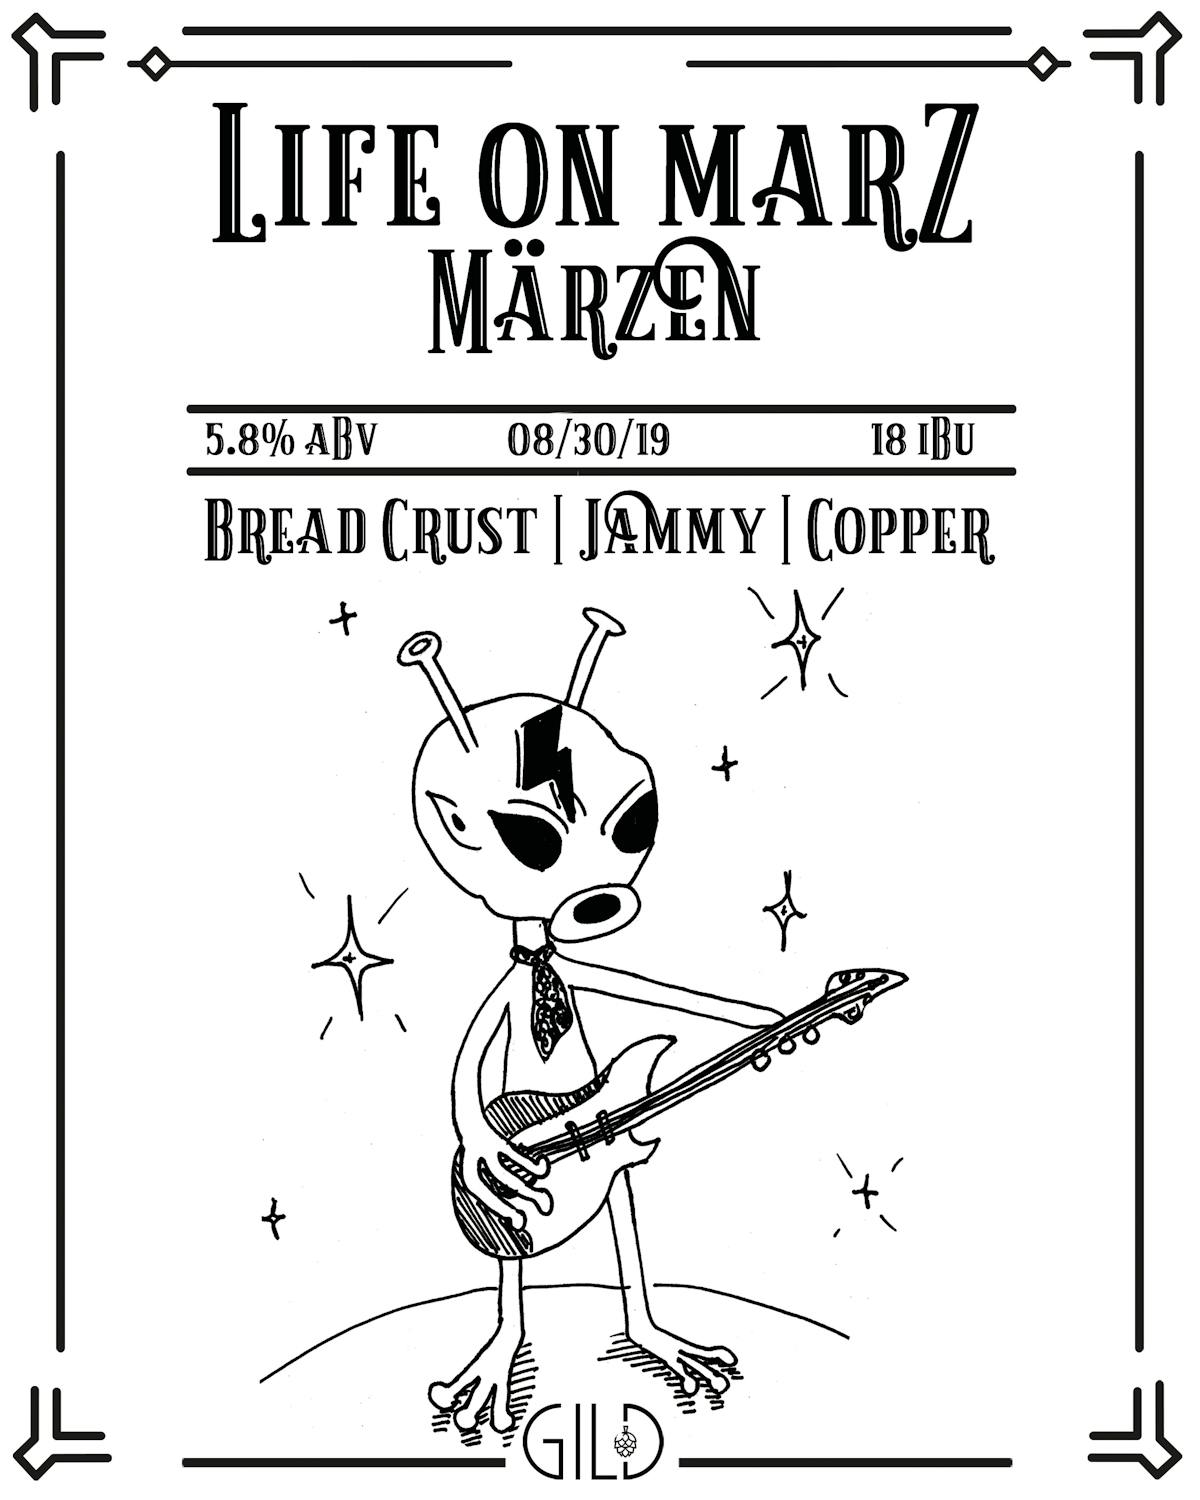 Life On Marz alien logo